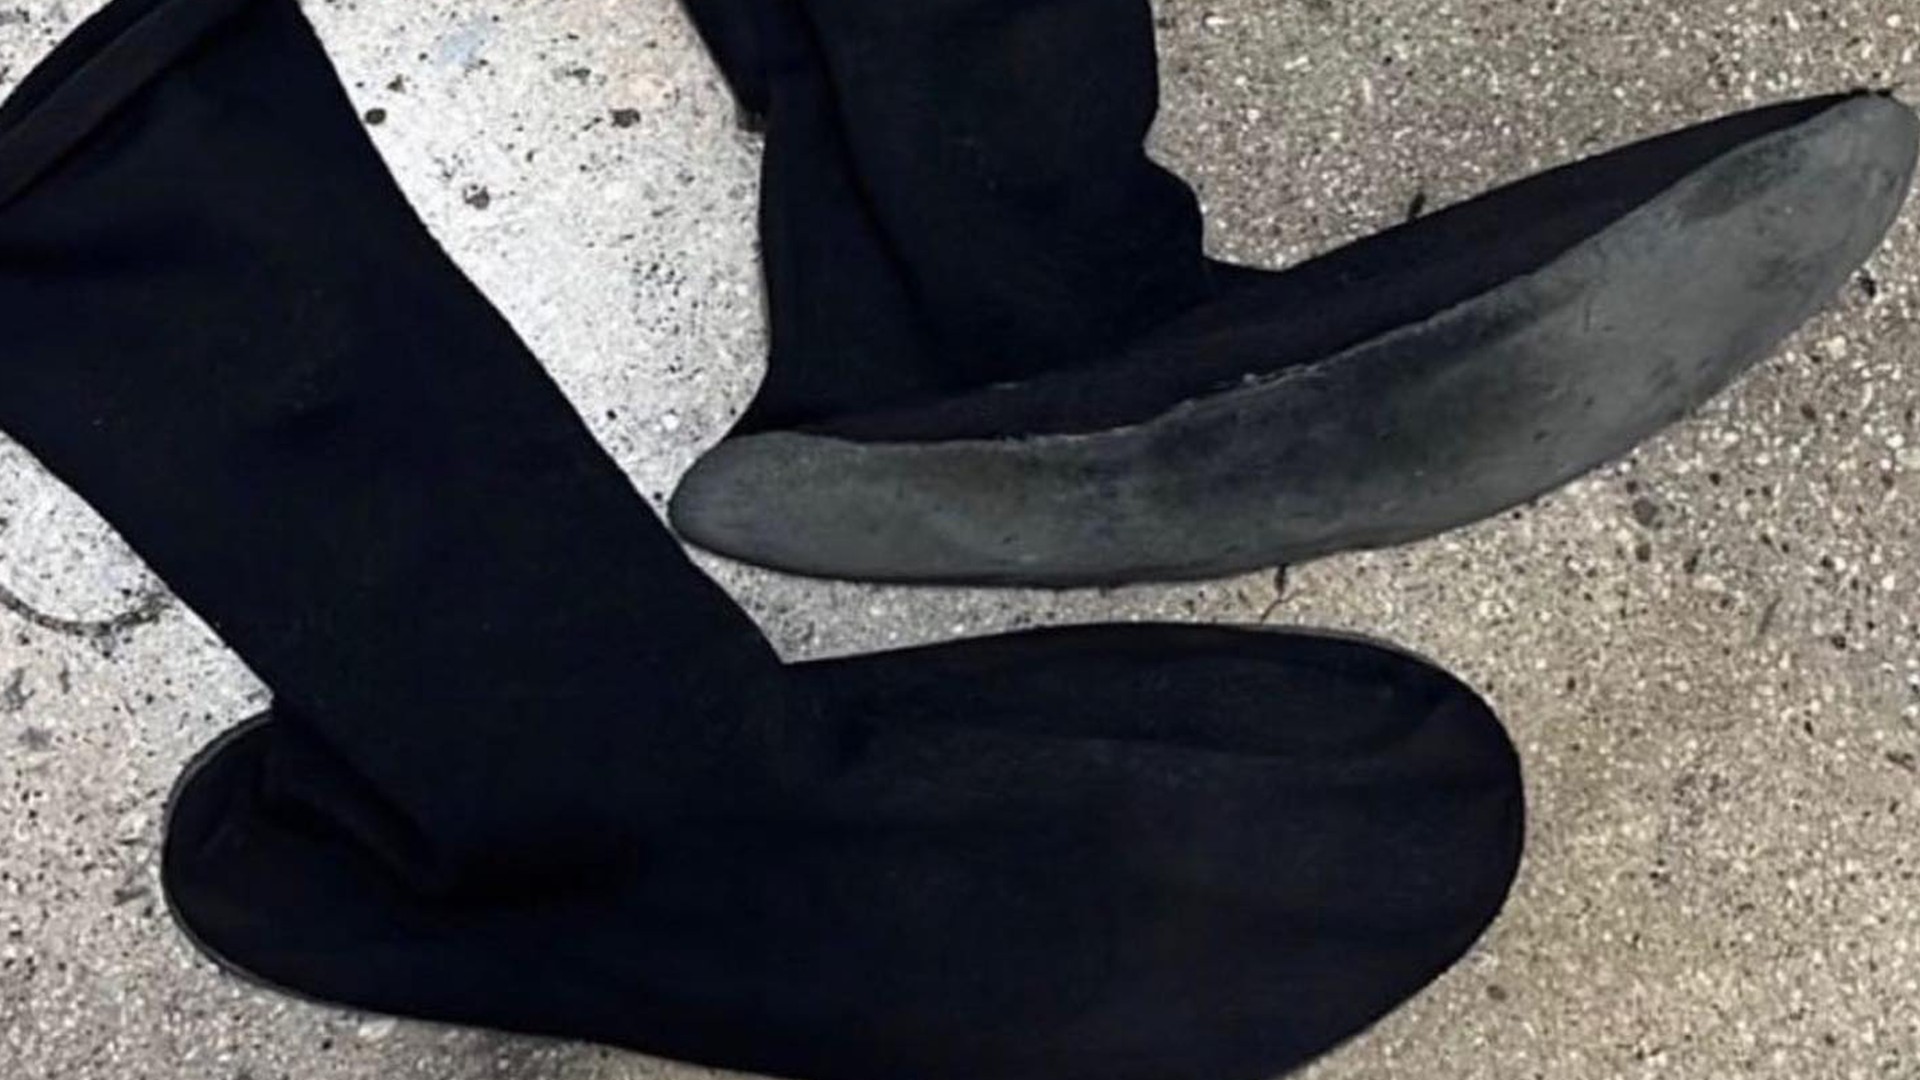 Kanye West Wearing a Sock Shoe